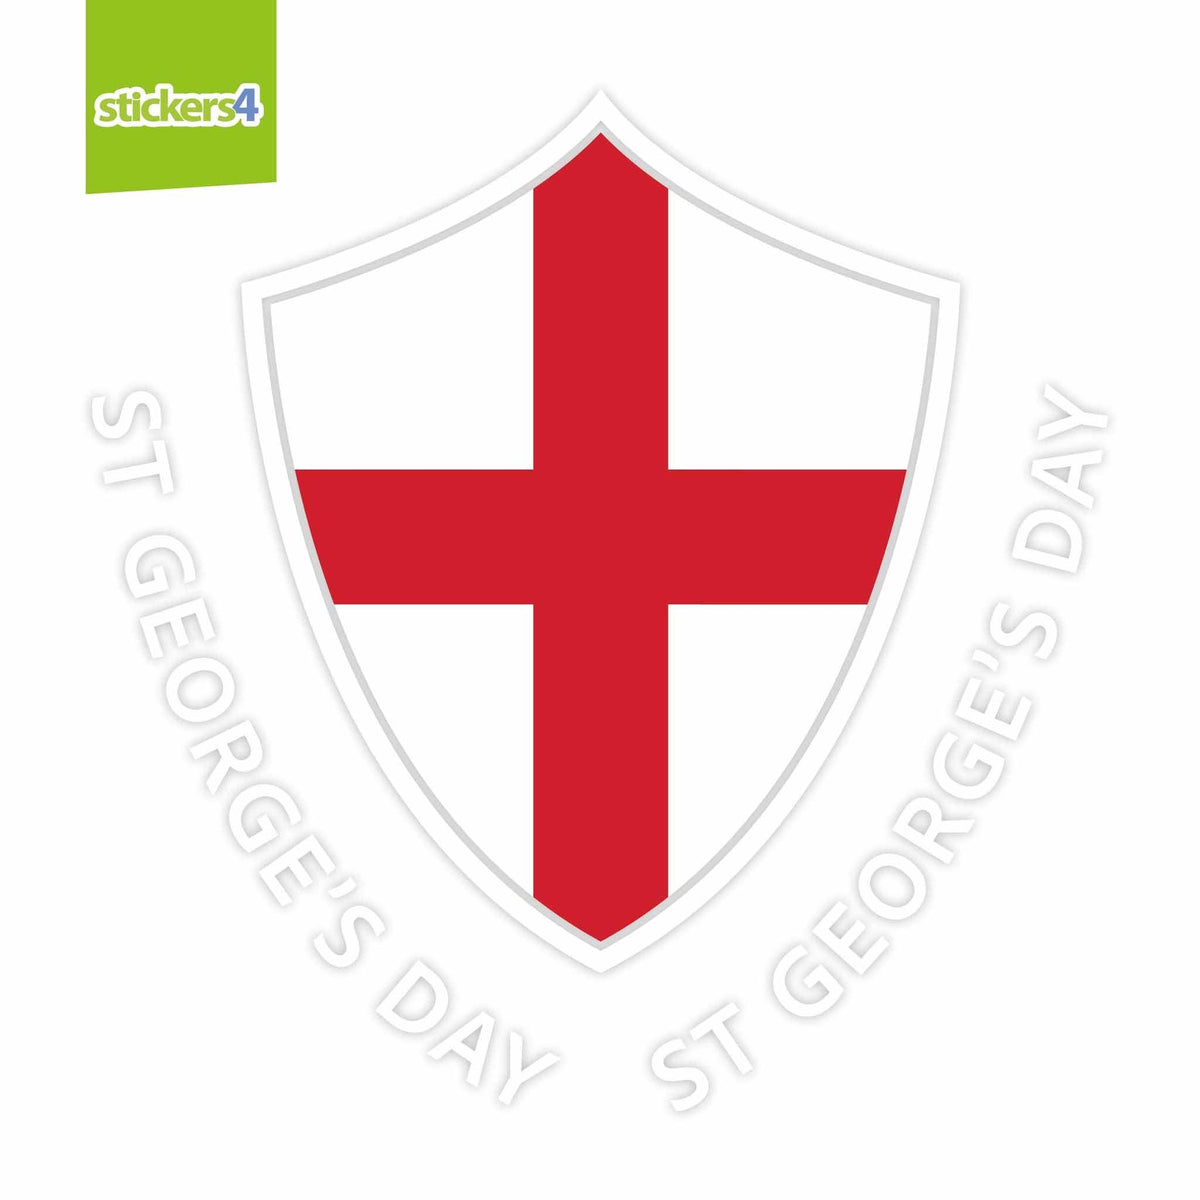 St George&#39;s Day Shield Window Sticker St George&#39;s Day Window Display